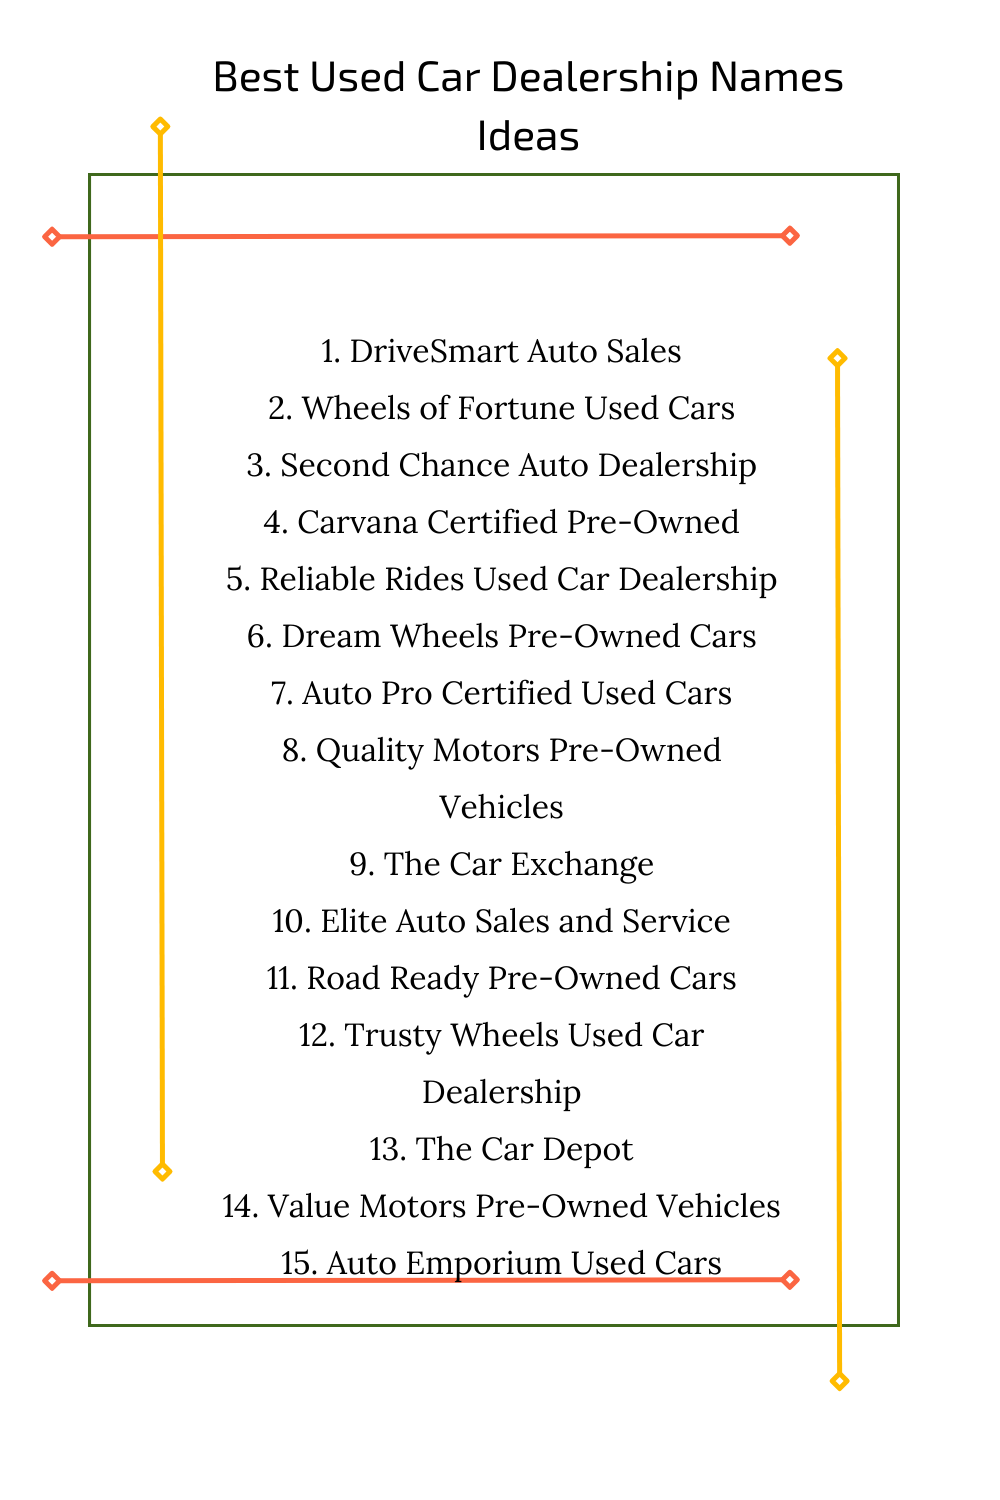 Best Used Car Dealership Names Ideas